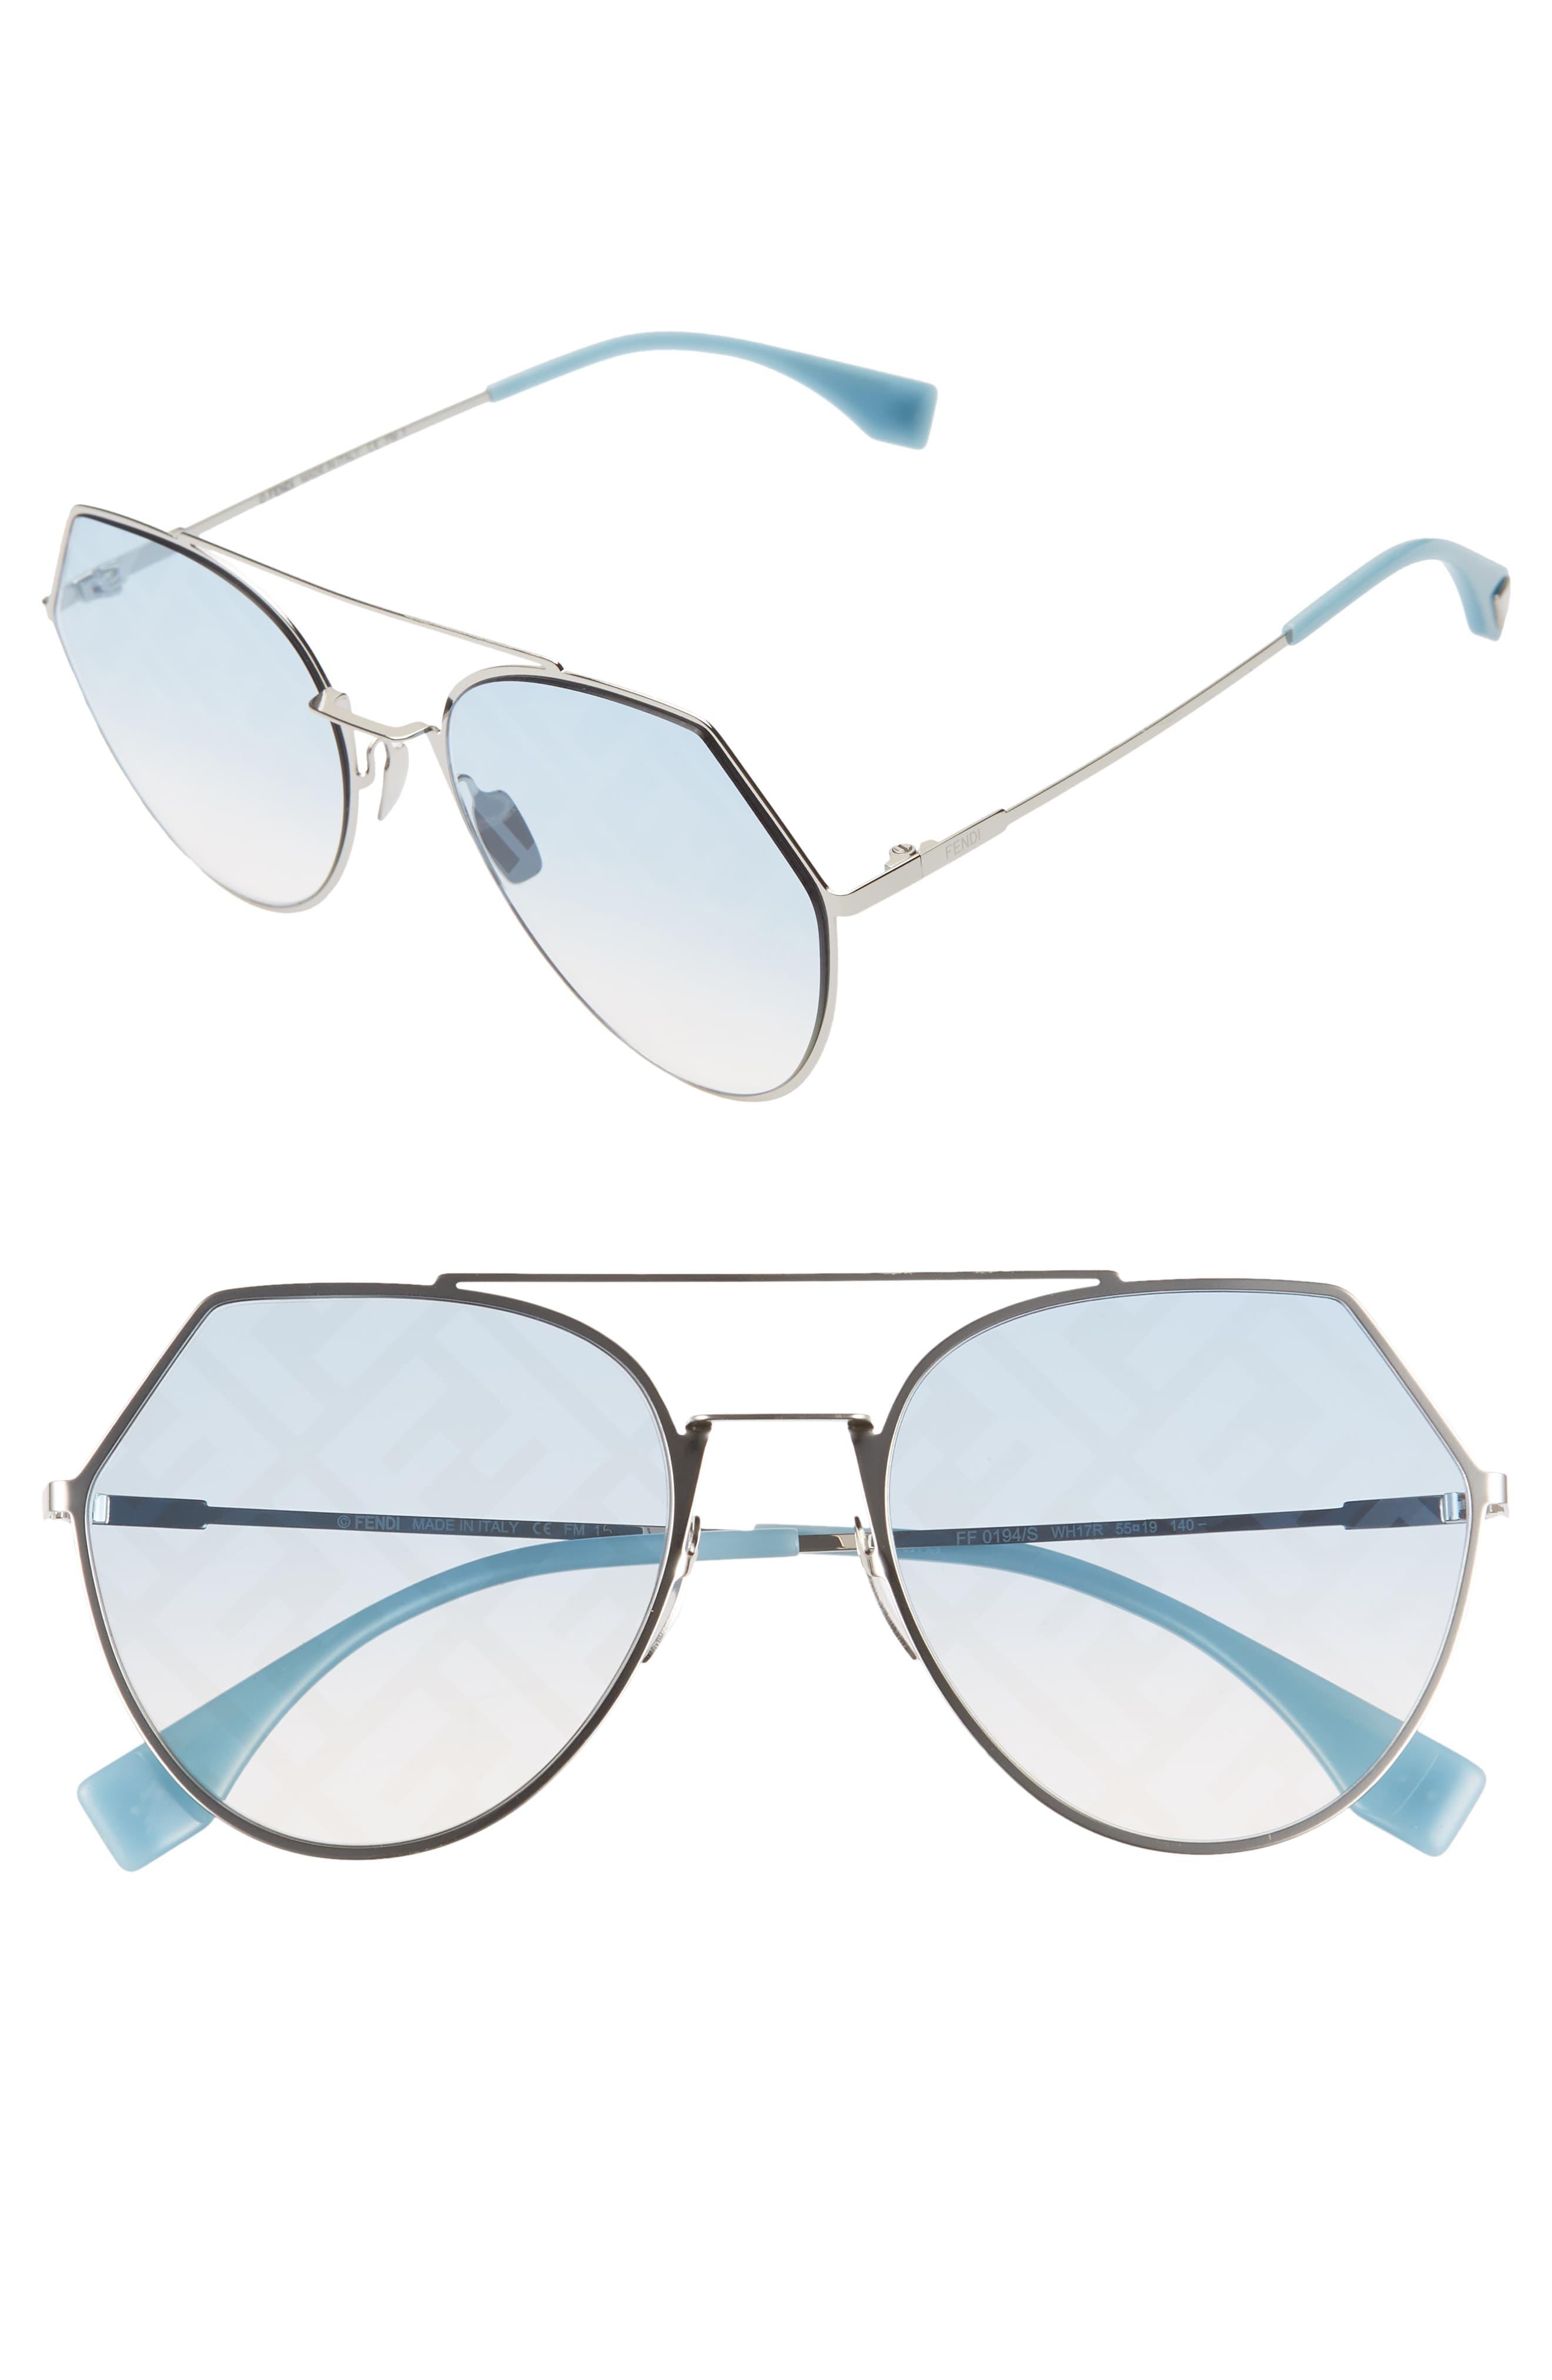 Fendi Eyeline 55mm Sunglasses in Silver/ Light Blue (Blue) - Lyst